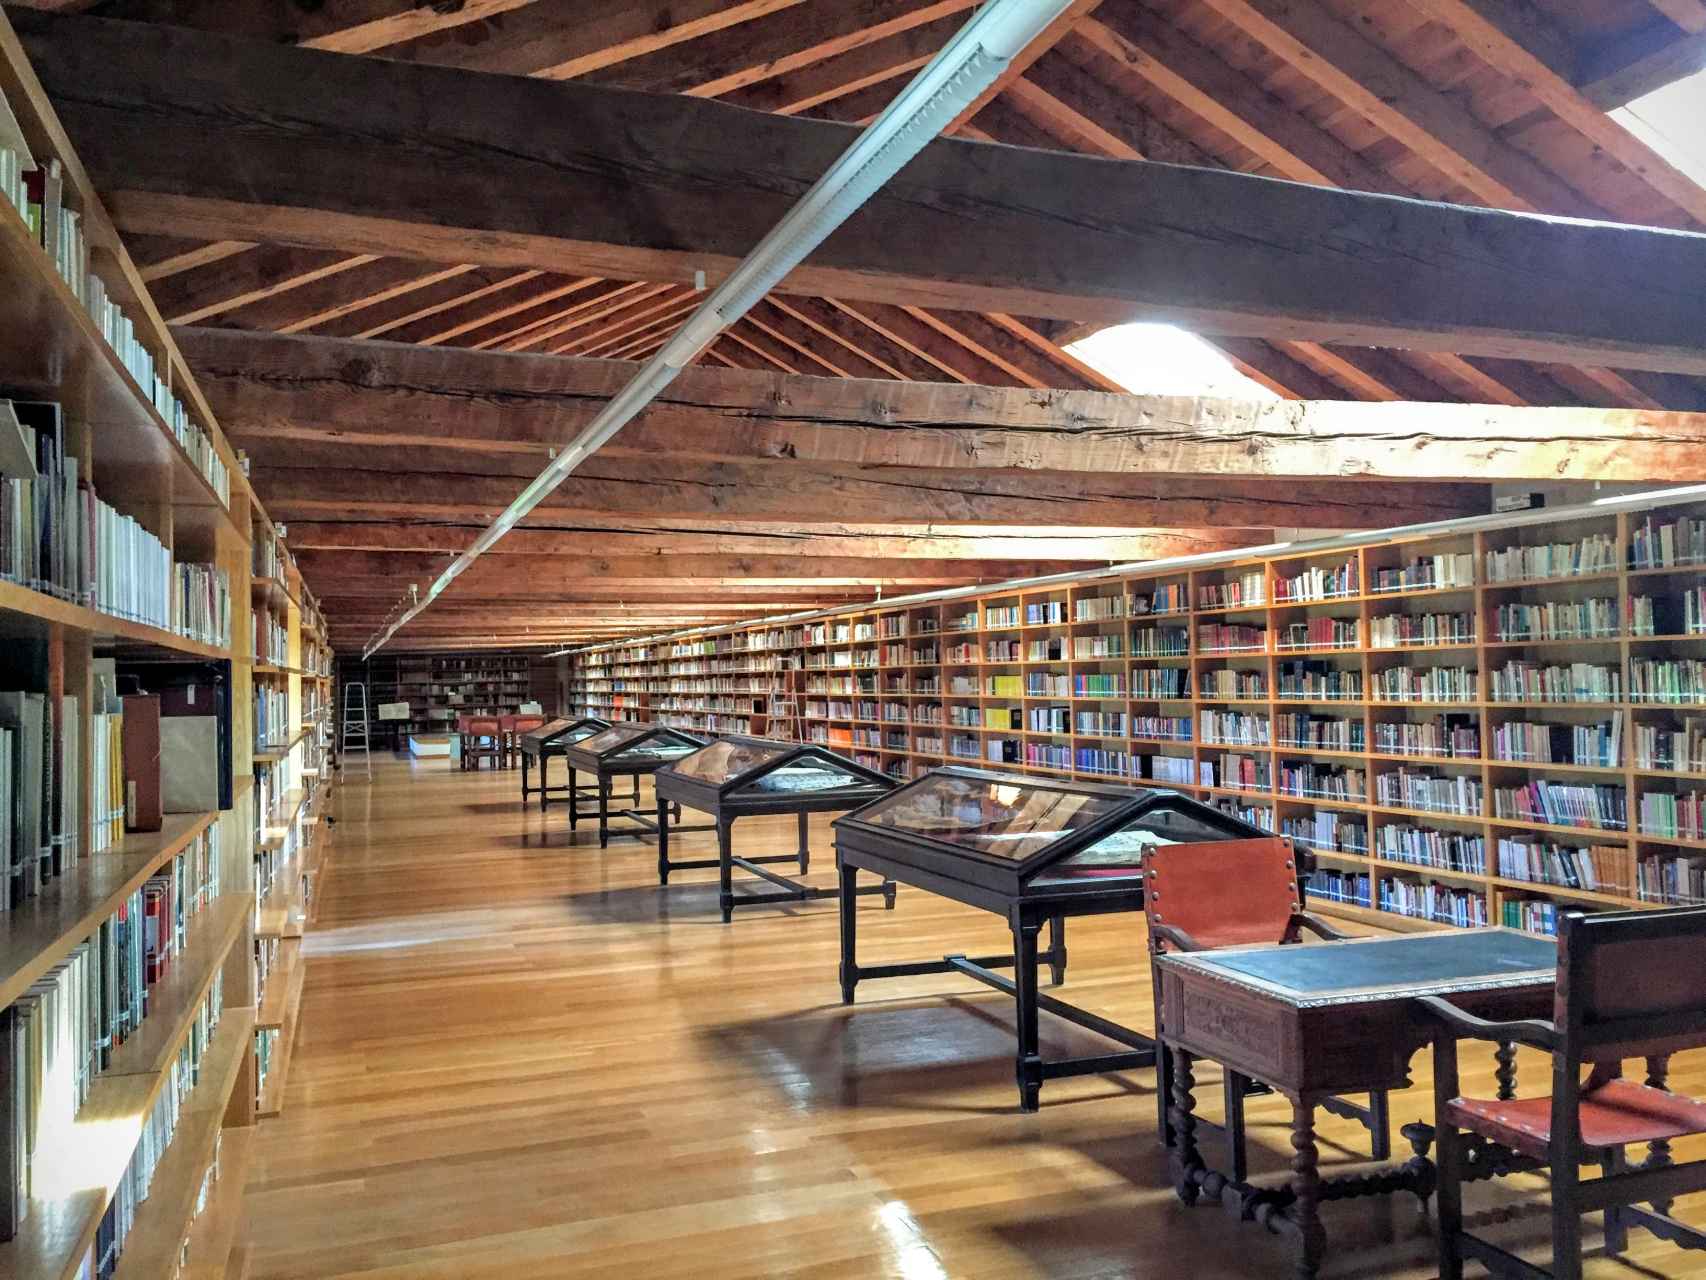 La biblioteca del monasterio.